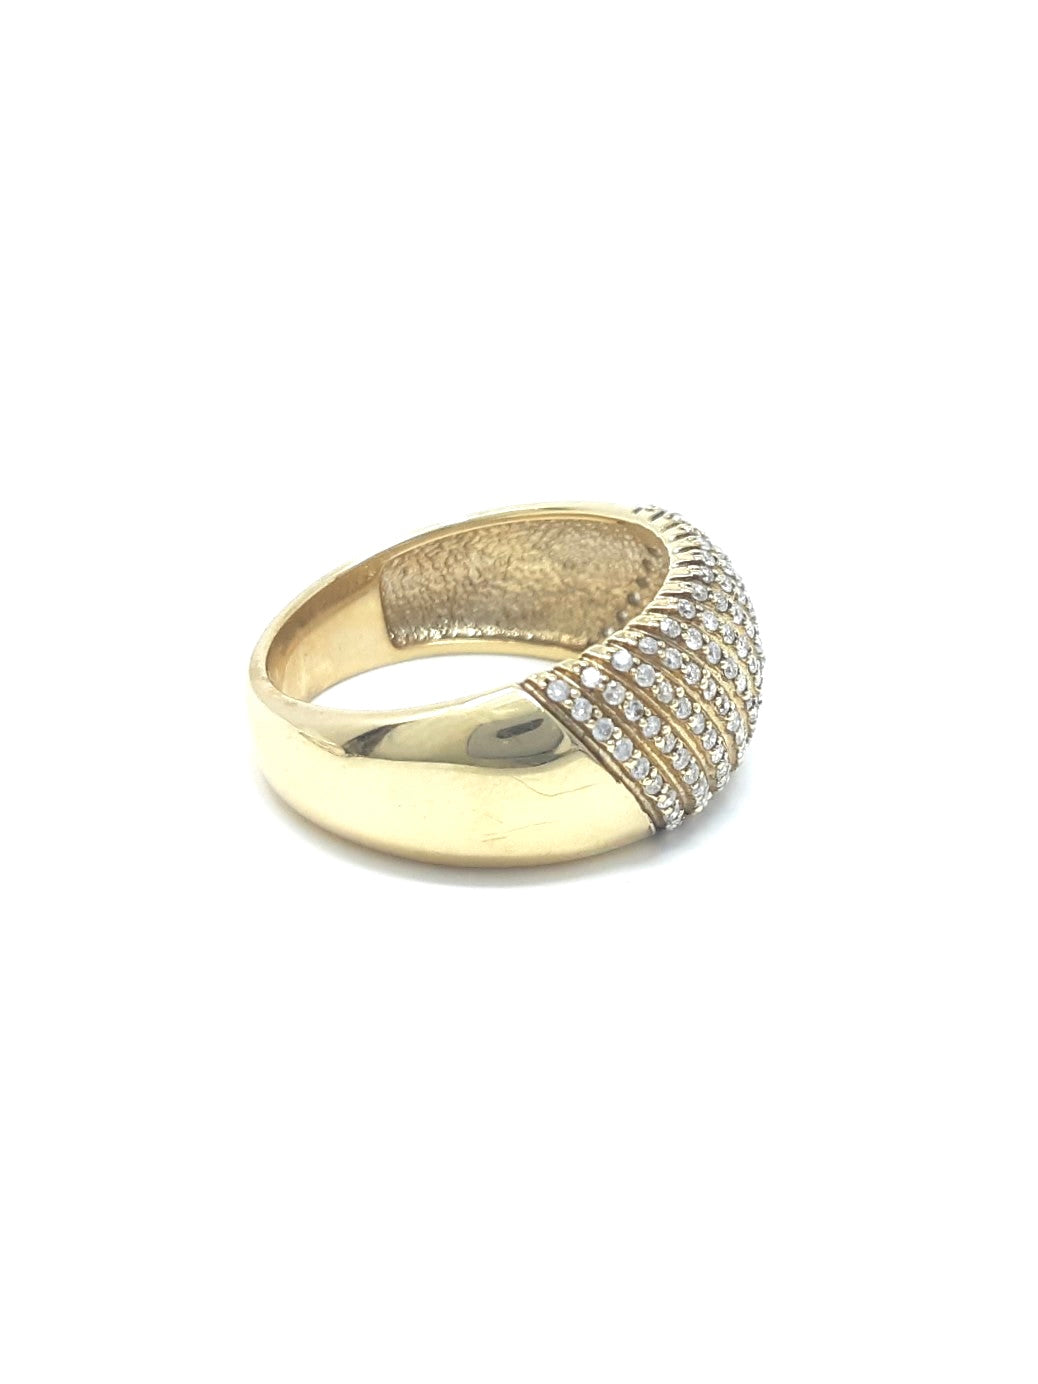 10K Yellow Gold 0.50cttw Round Cut Diamond Statement Ring, size 6.5